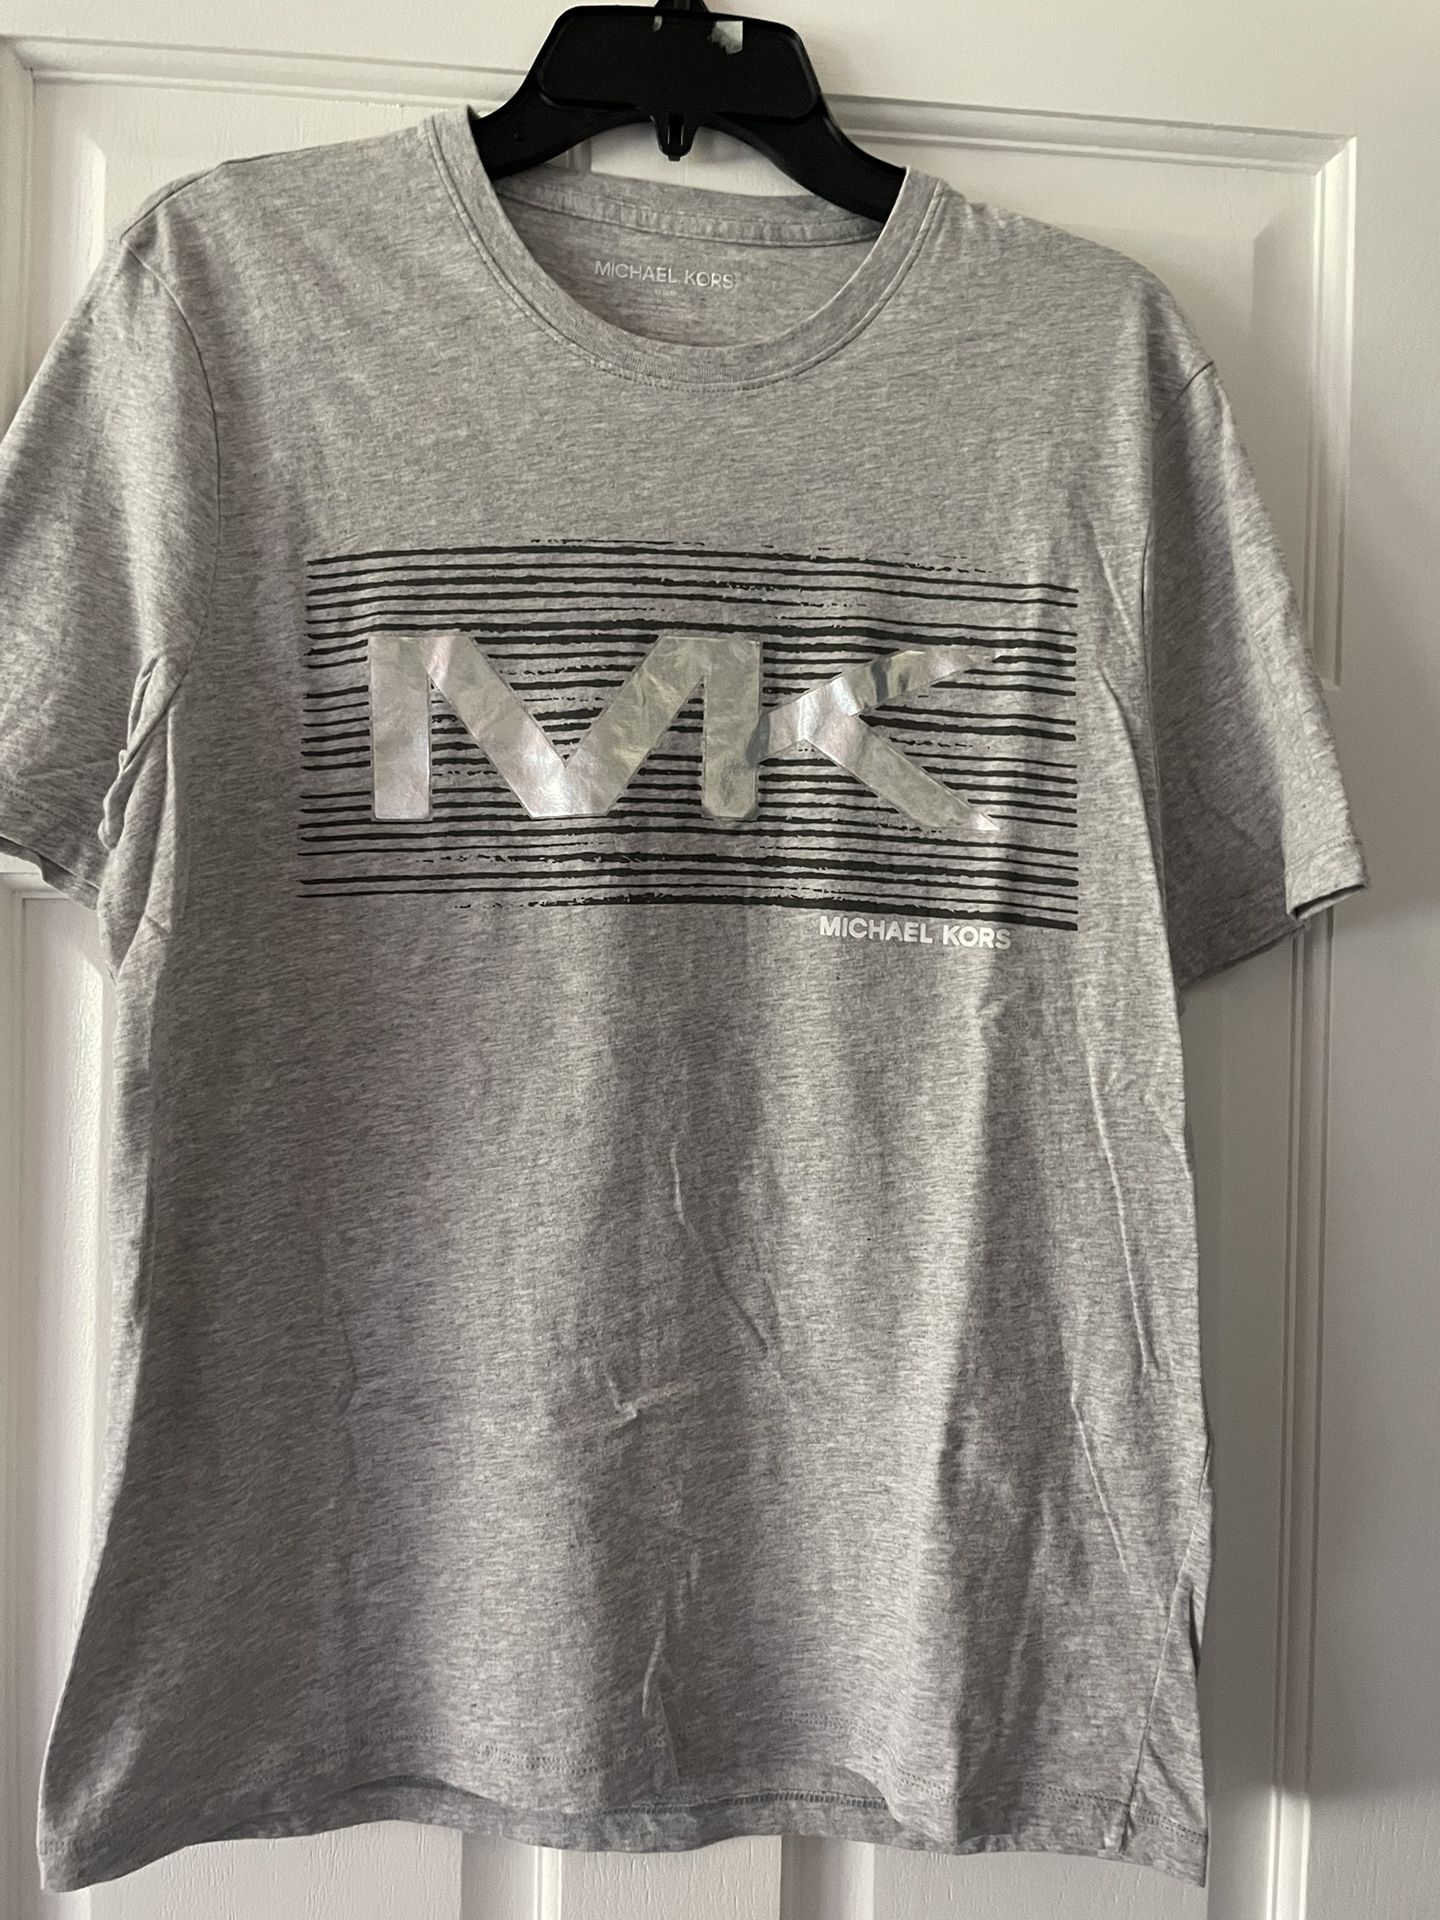 Michael kors Men’s Shirt